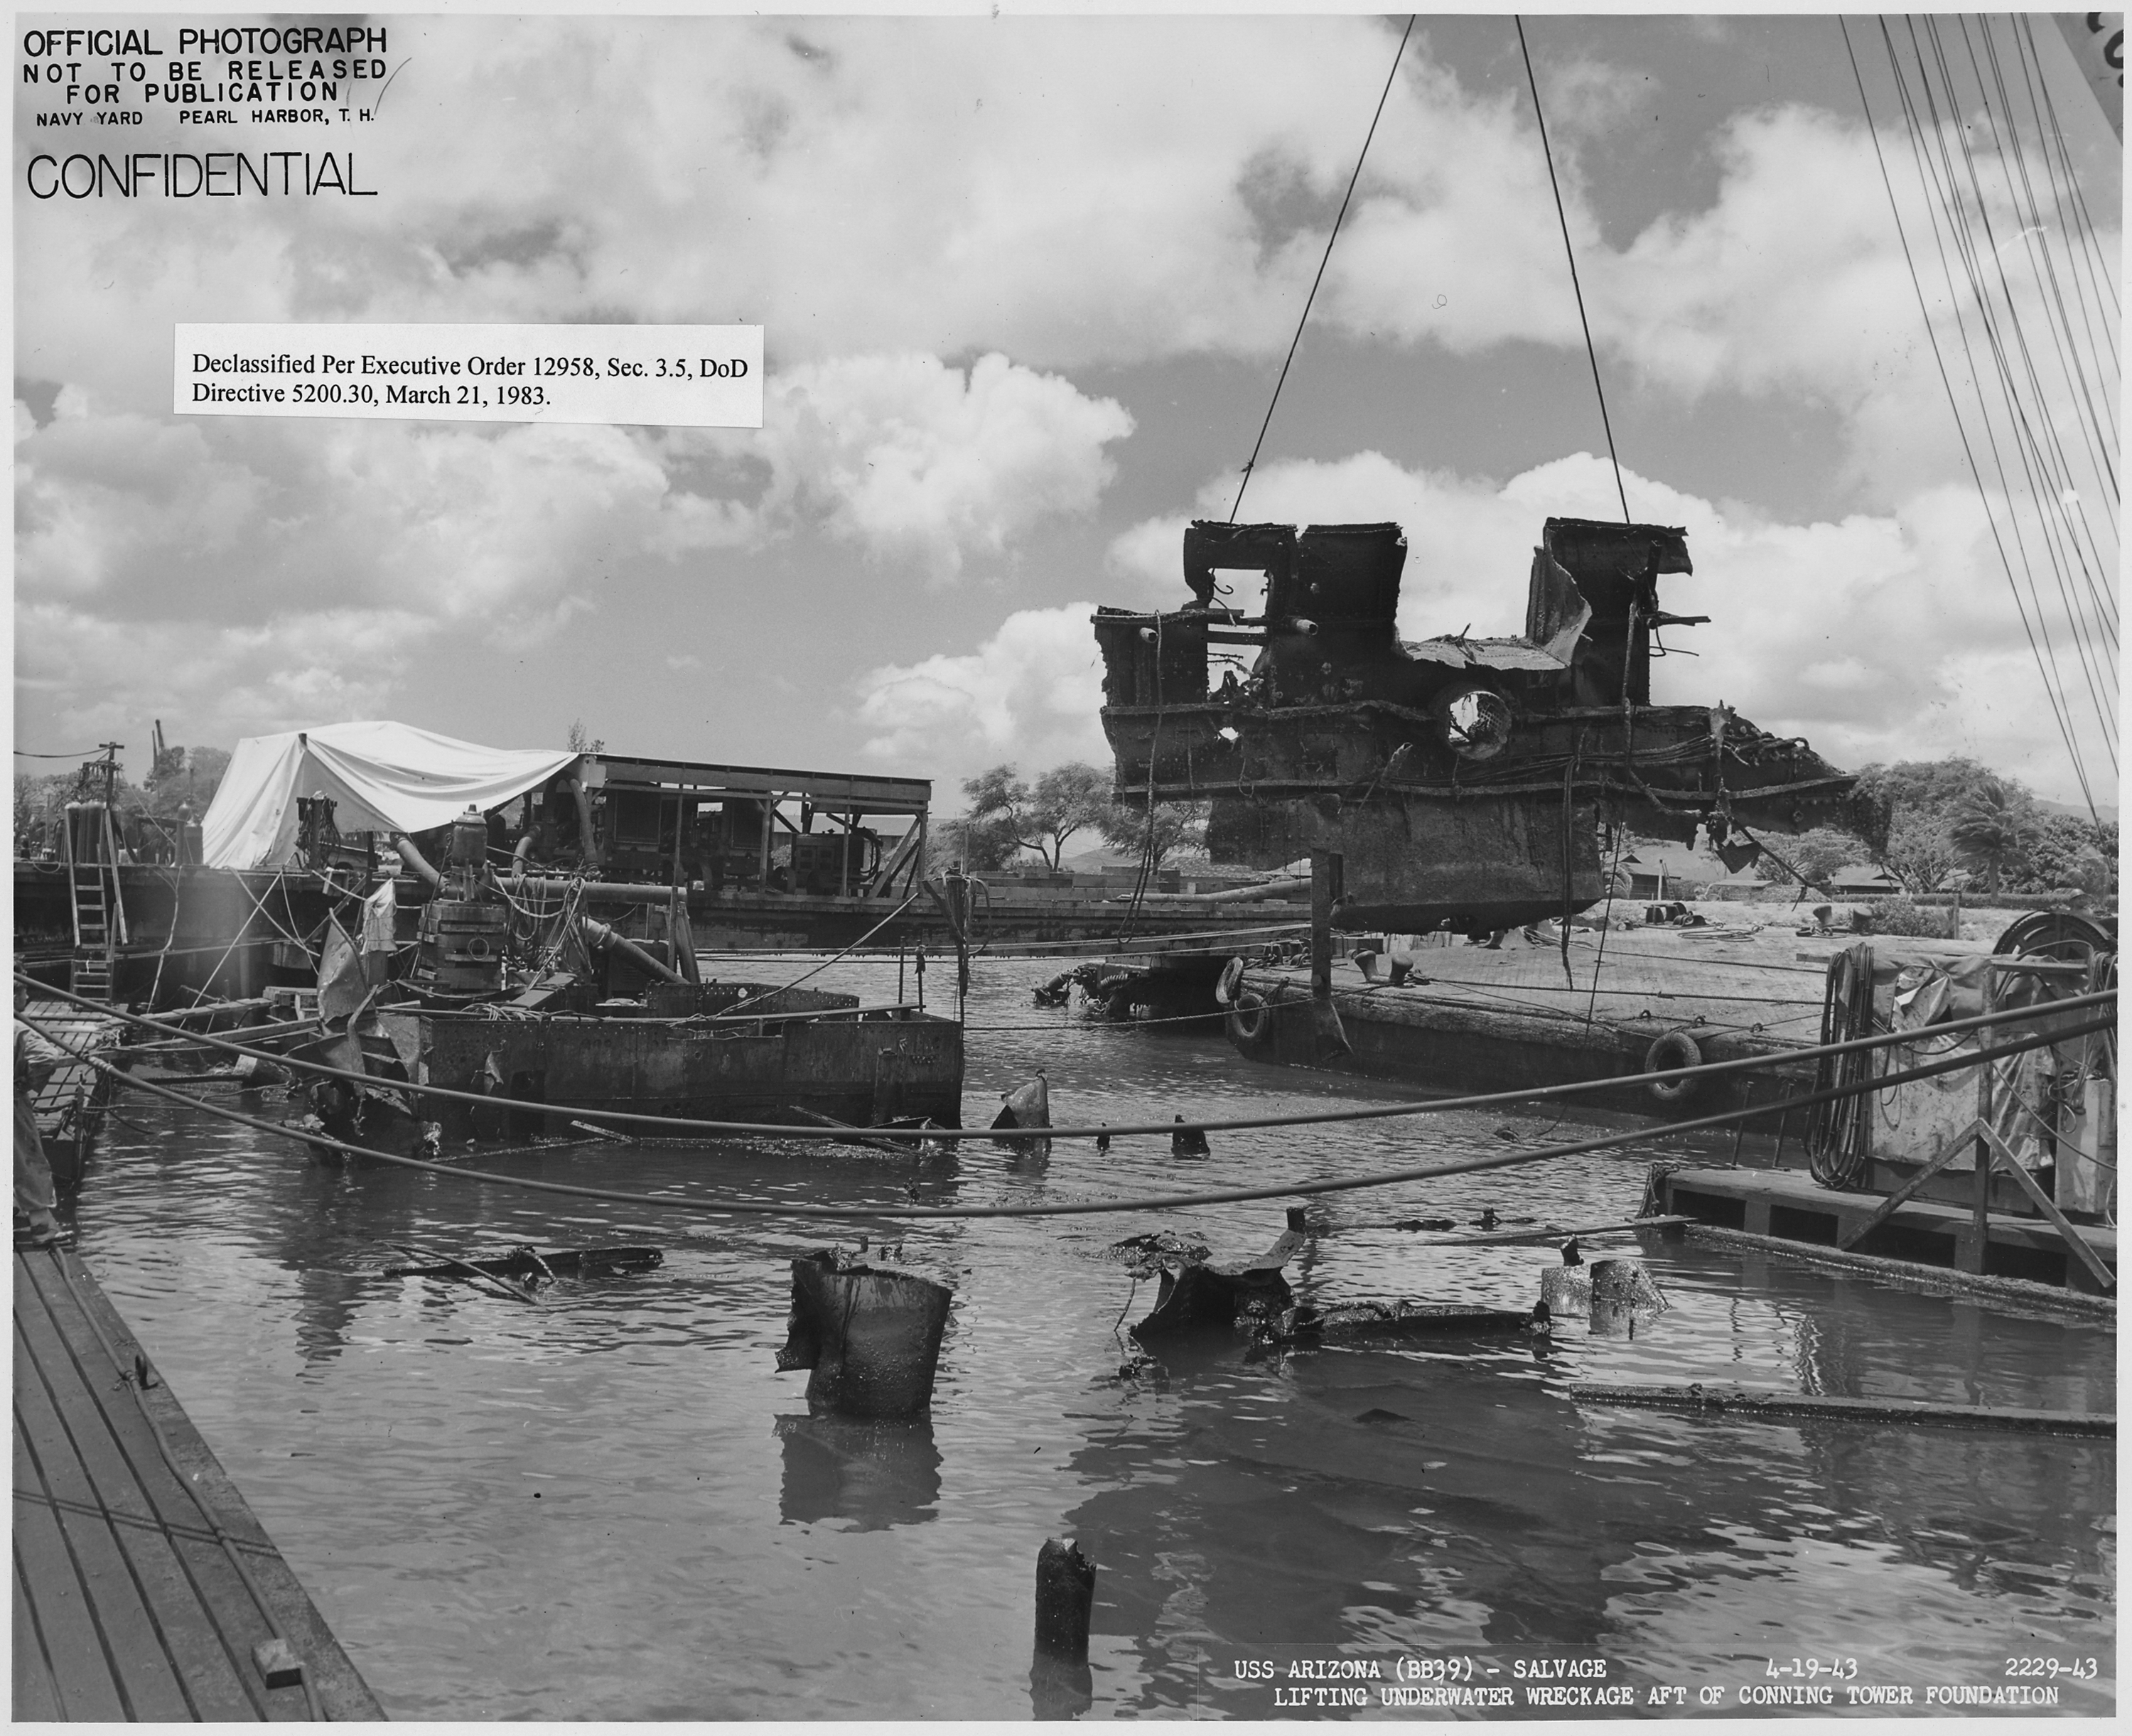 US Arizona (BB39)- Salvage, 2229-43, Lifting underwater wreckage aft of conning tower foundation - NARA - 296933